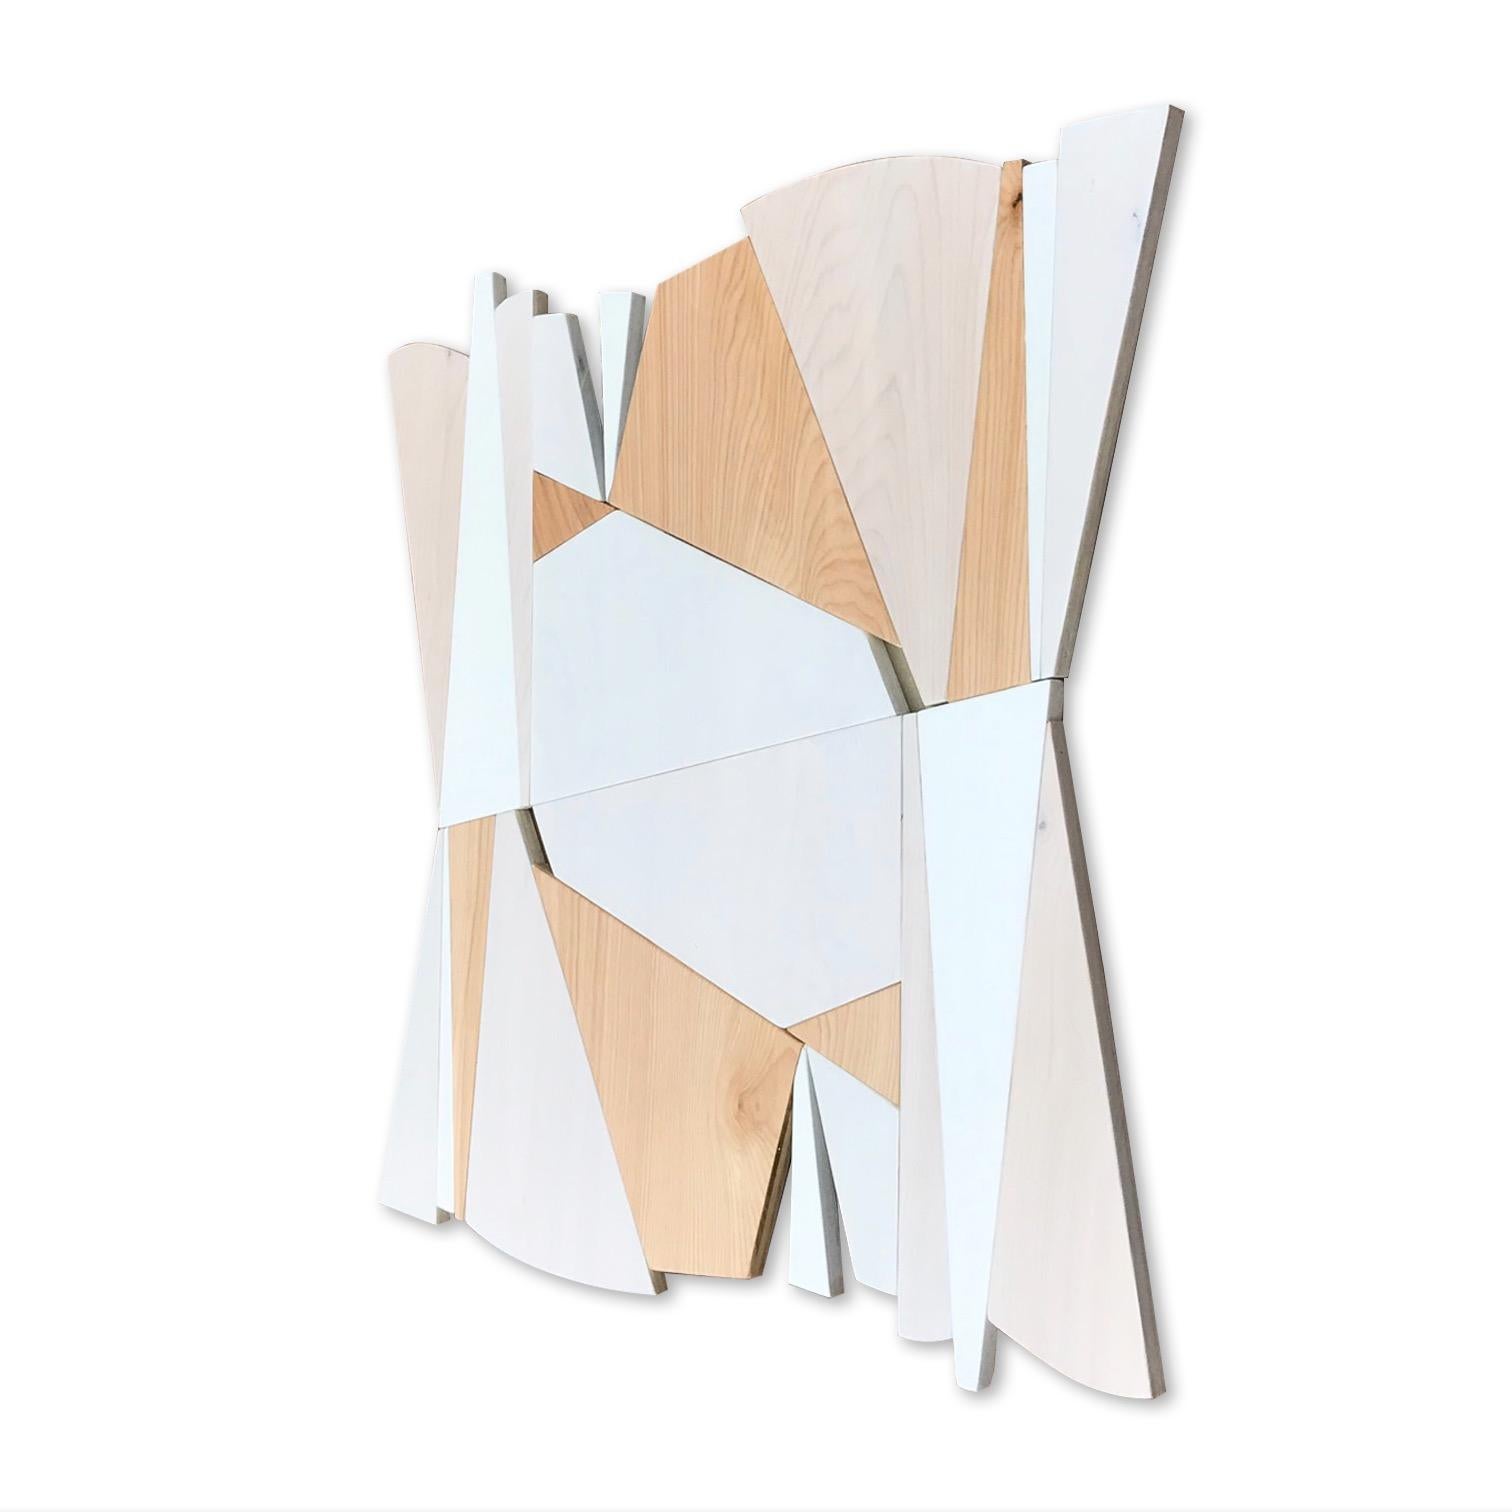  Banneret (wood wall art modern sculpture minimal geometric white cream art deco - Sculpture by Scott Troxel